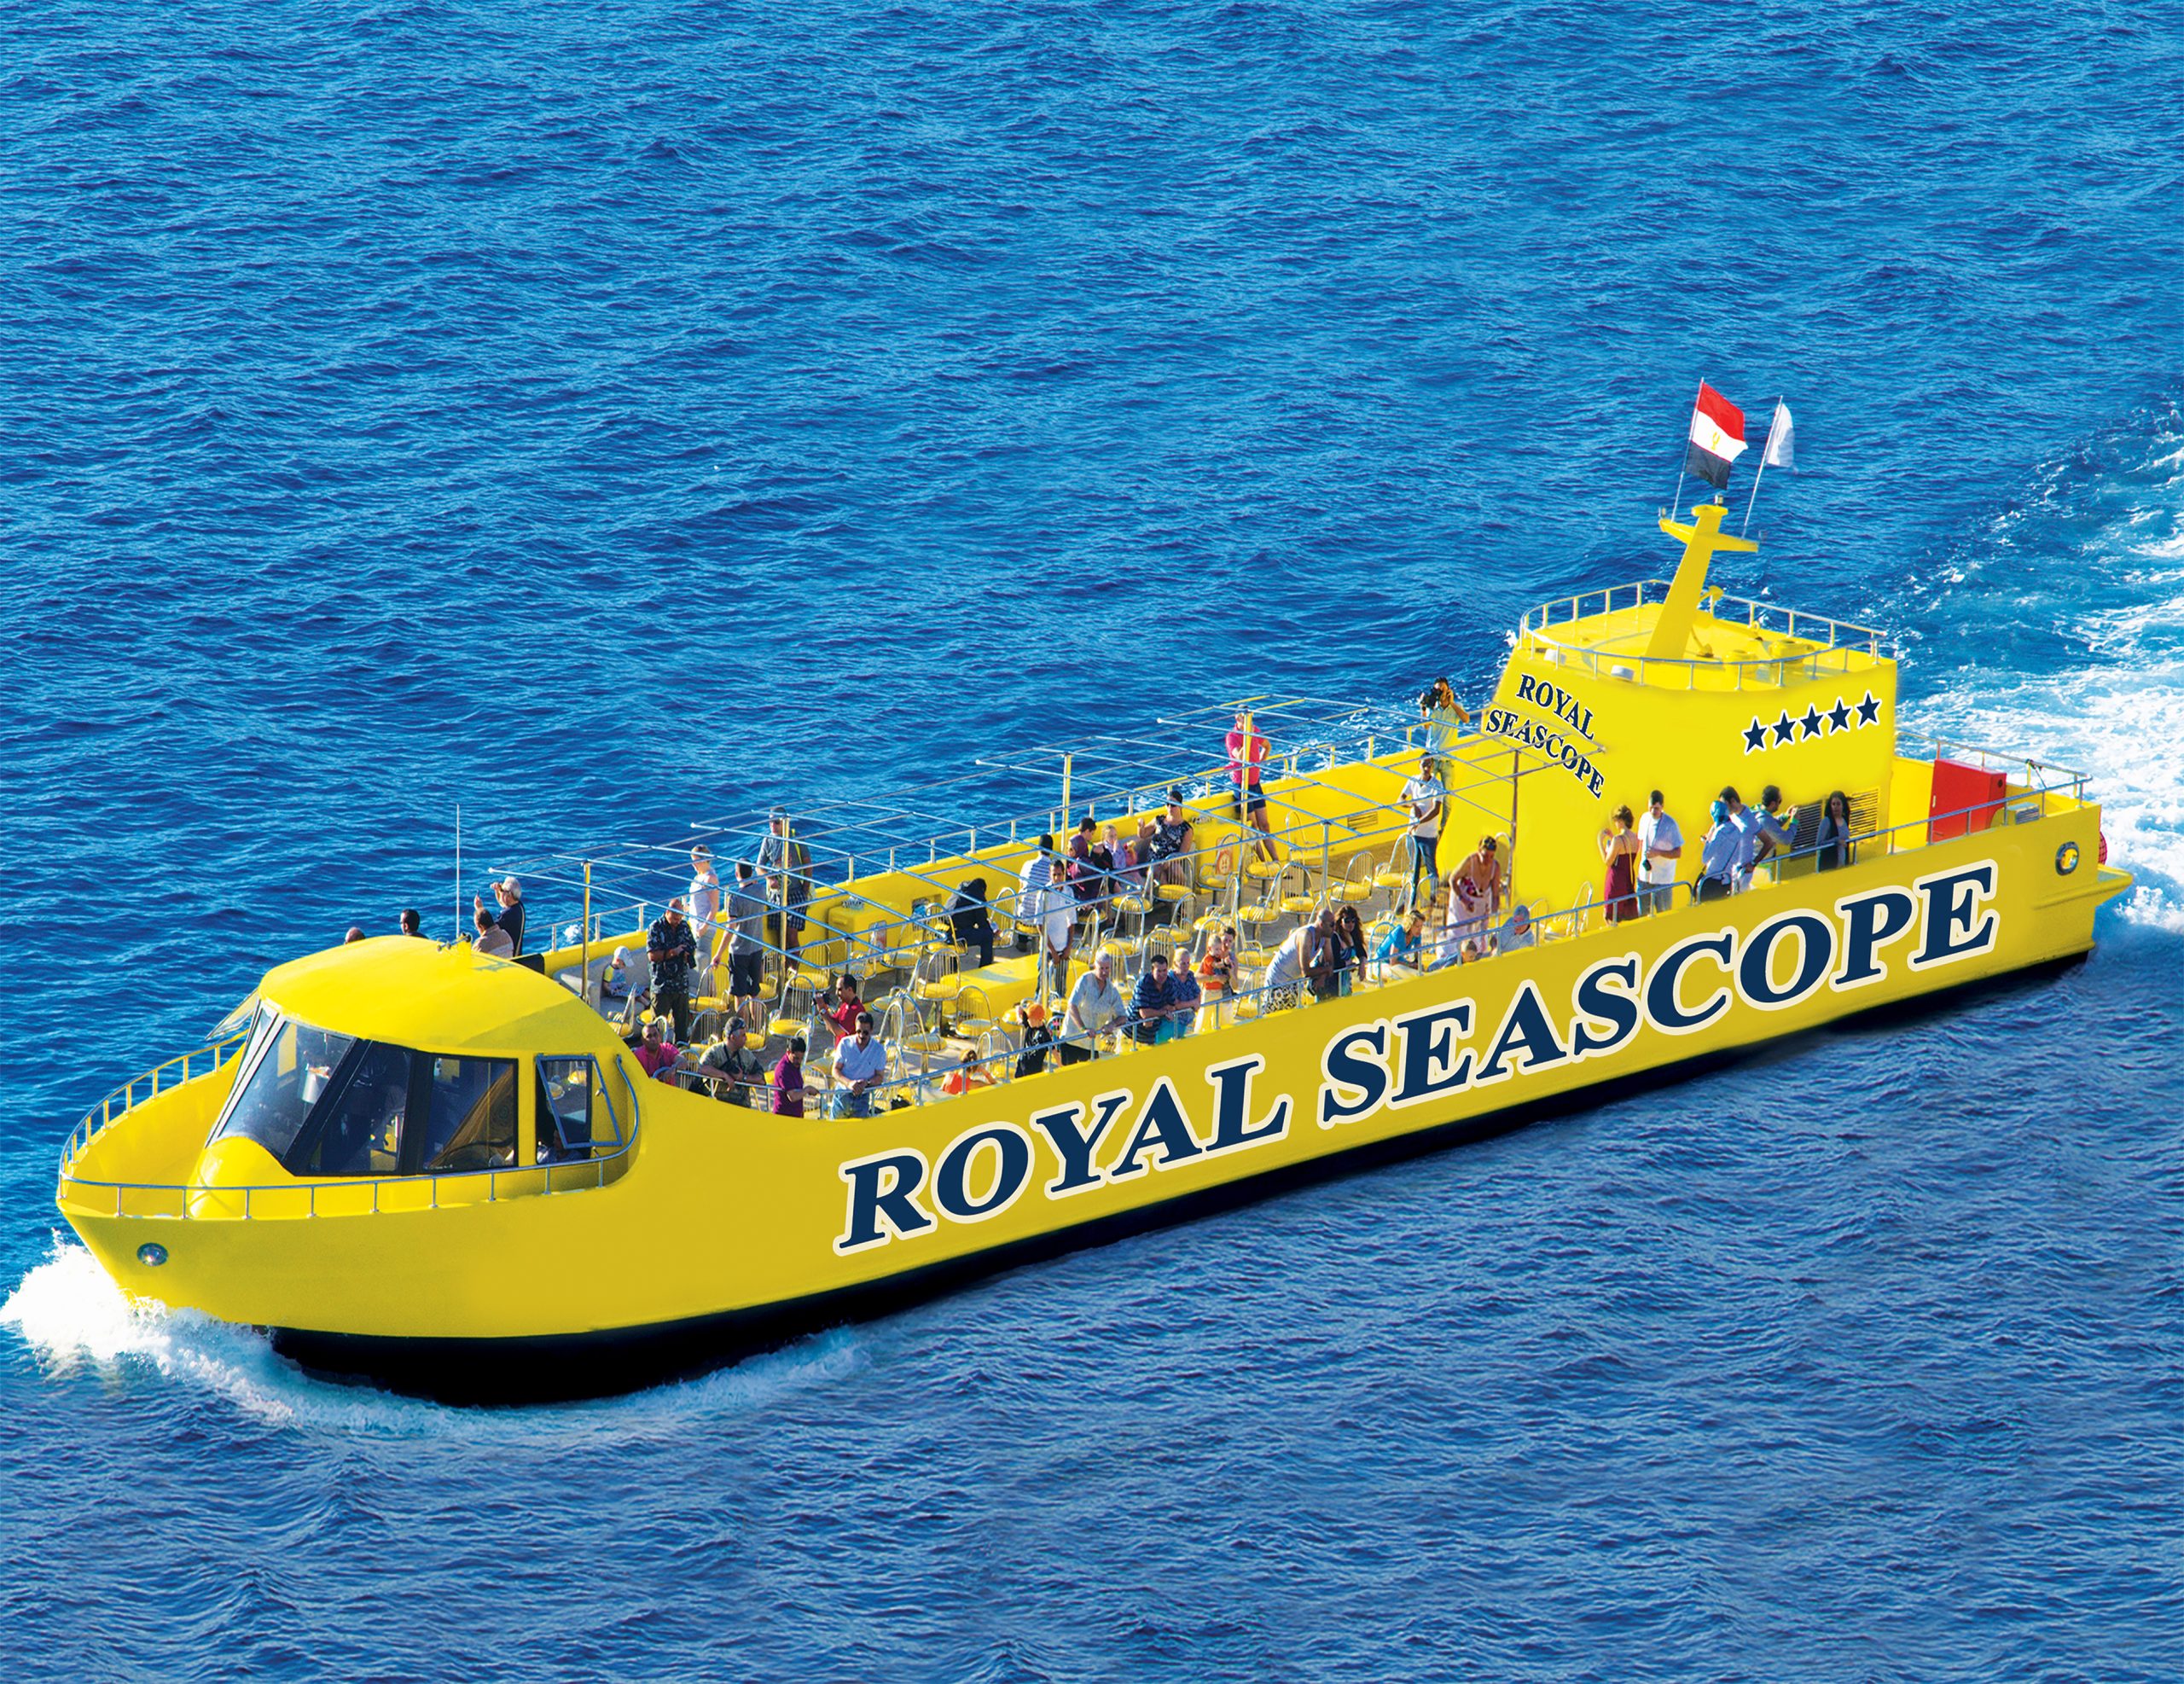 Royal Sea Scope